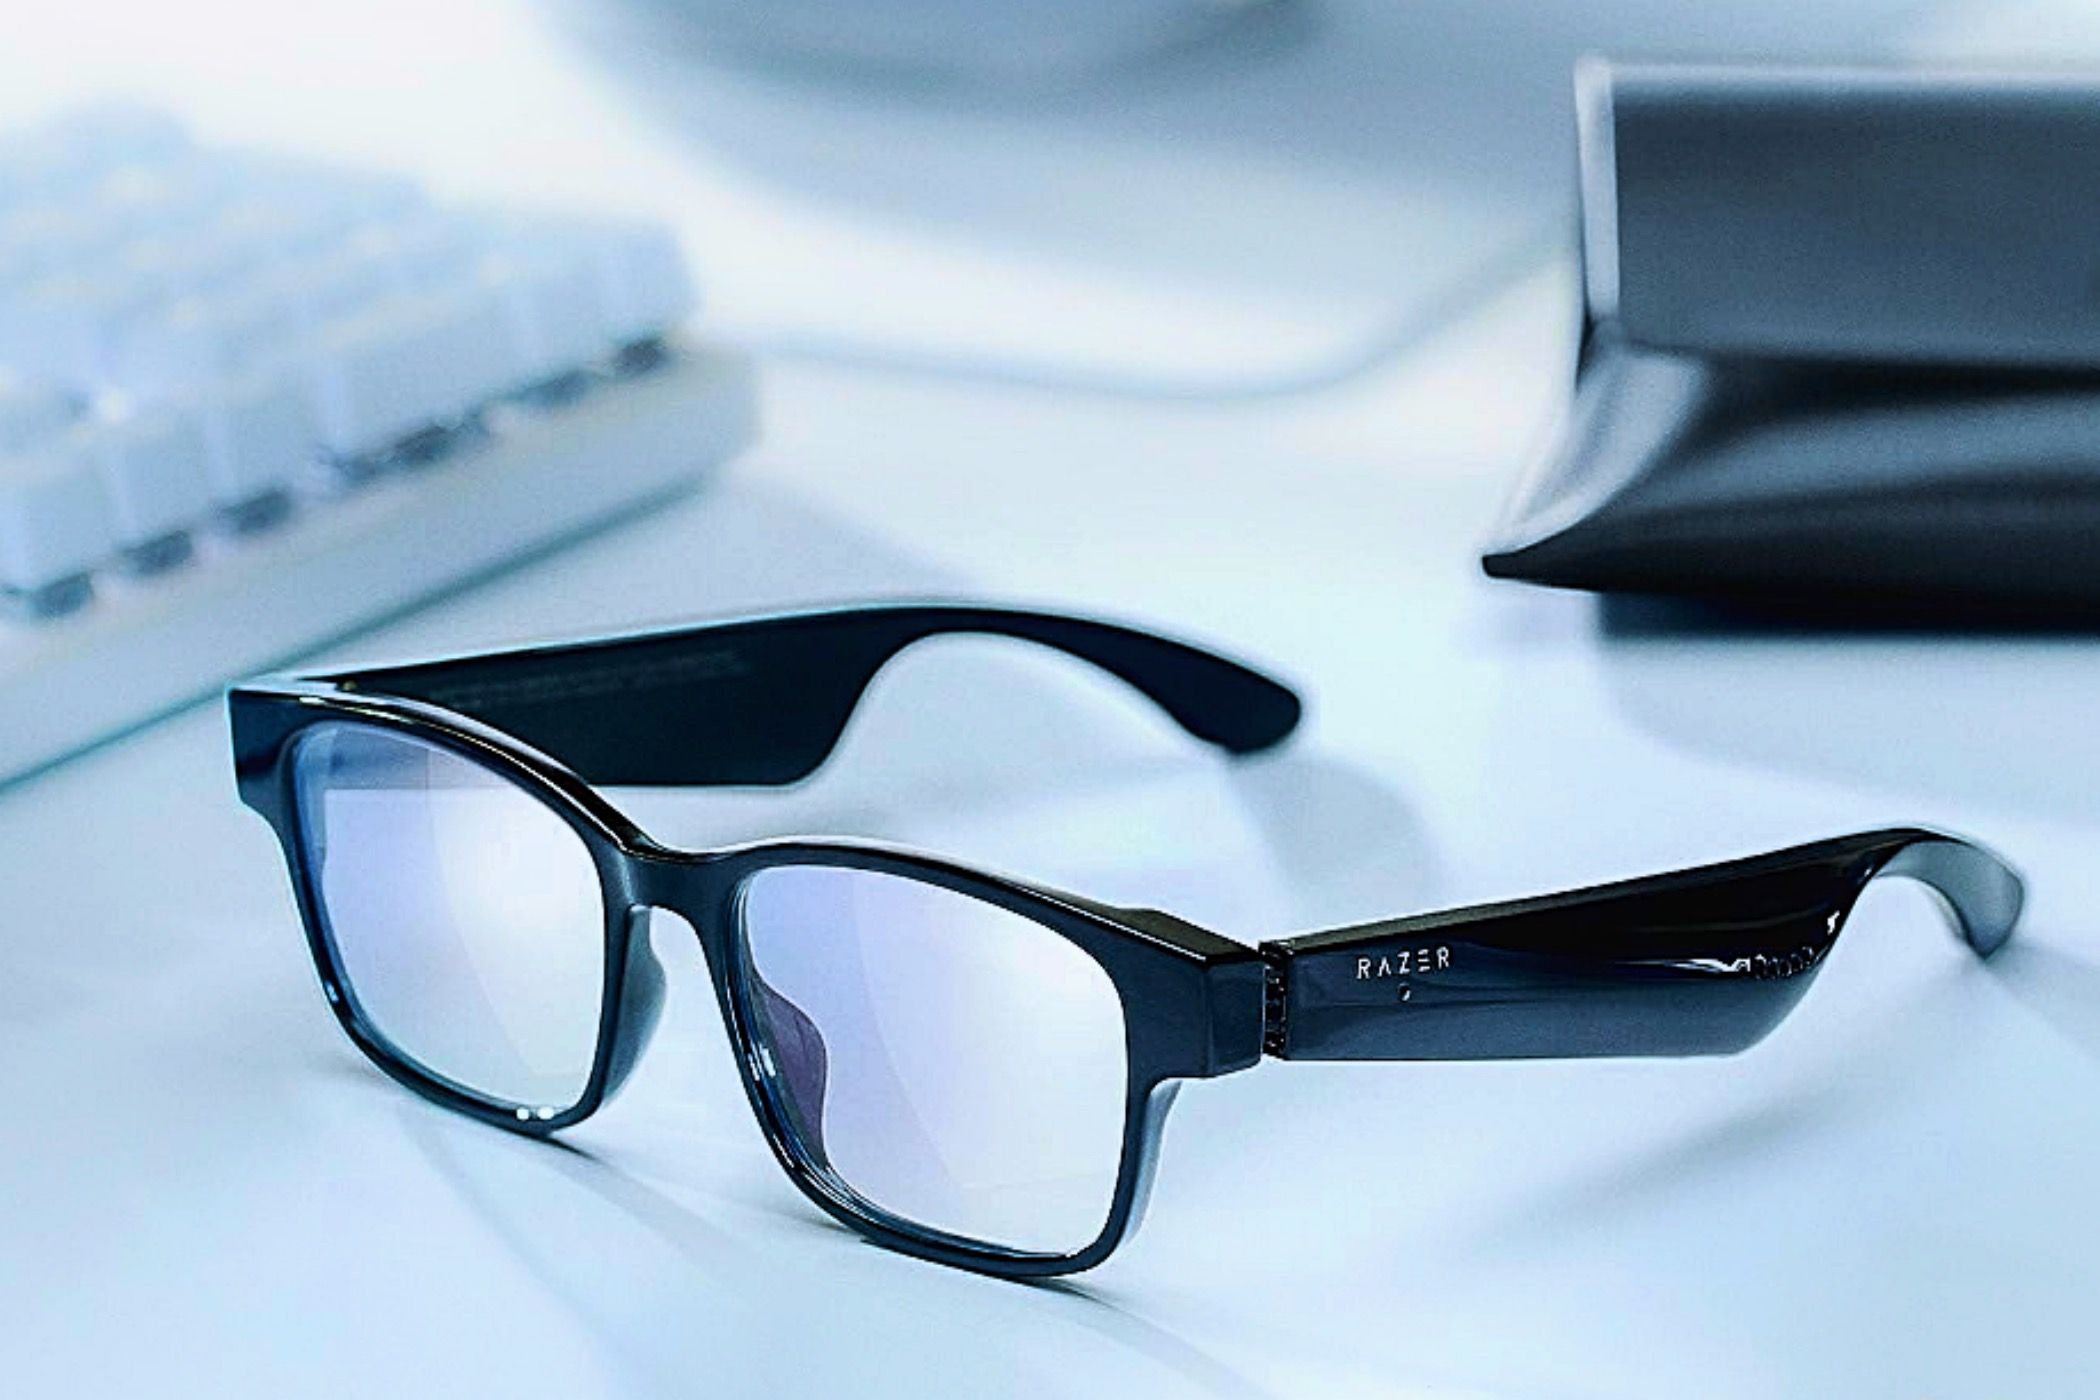 A pair of Razer Anzu Smart Glasses sitting on the desk